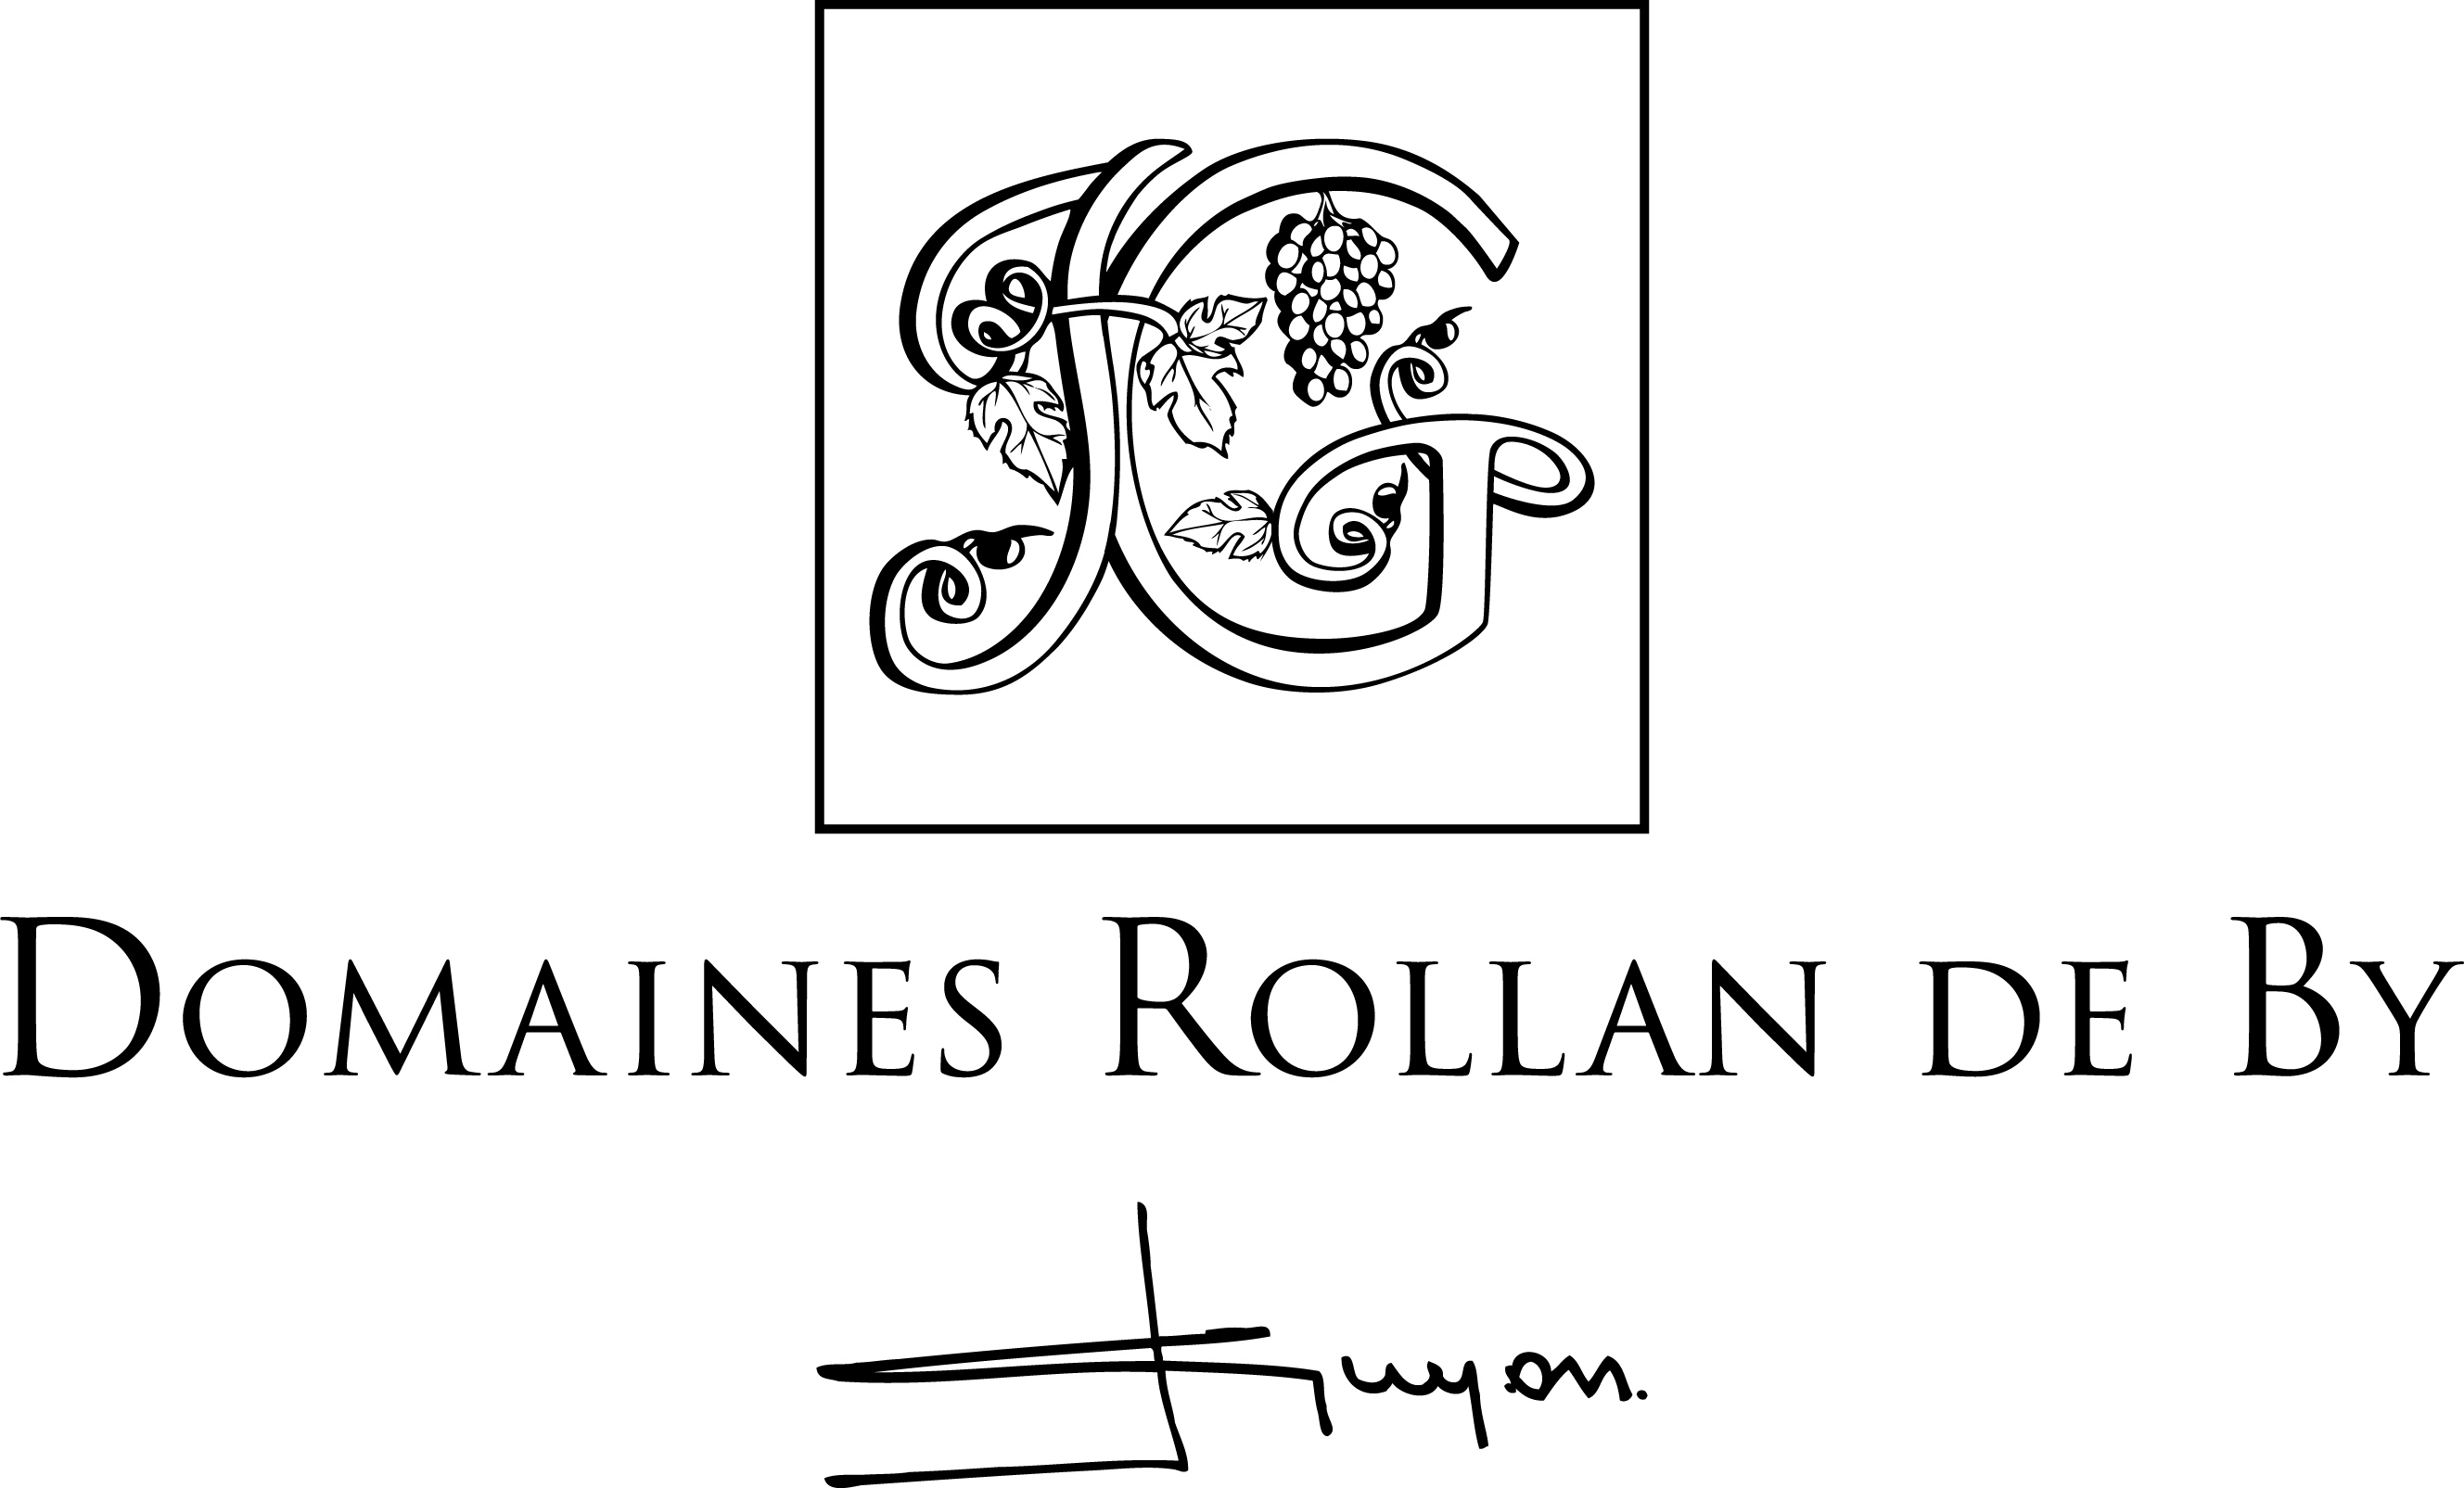 Domaines Rollan de By